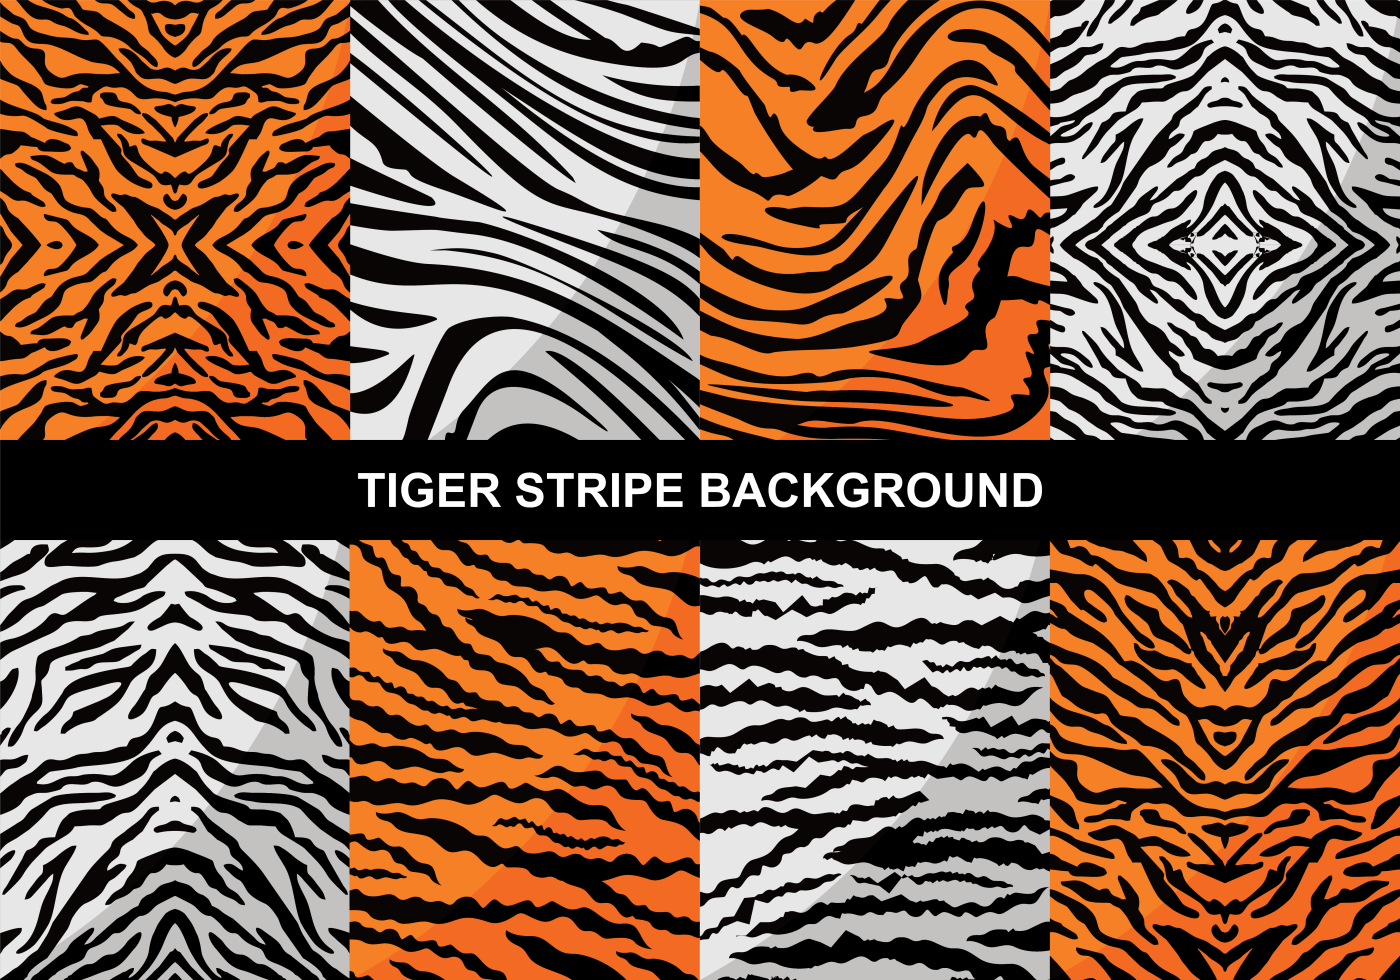 Tiger Stripe Background 145907 Vector Art at Vecteezy